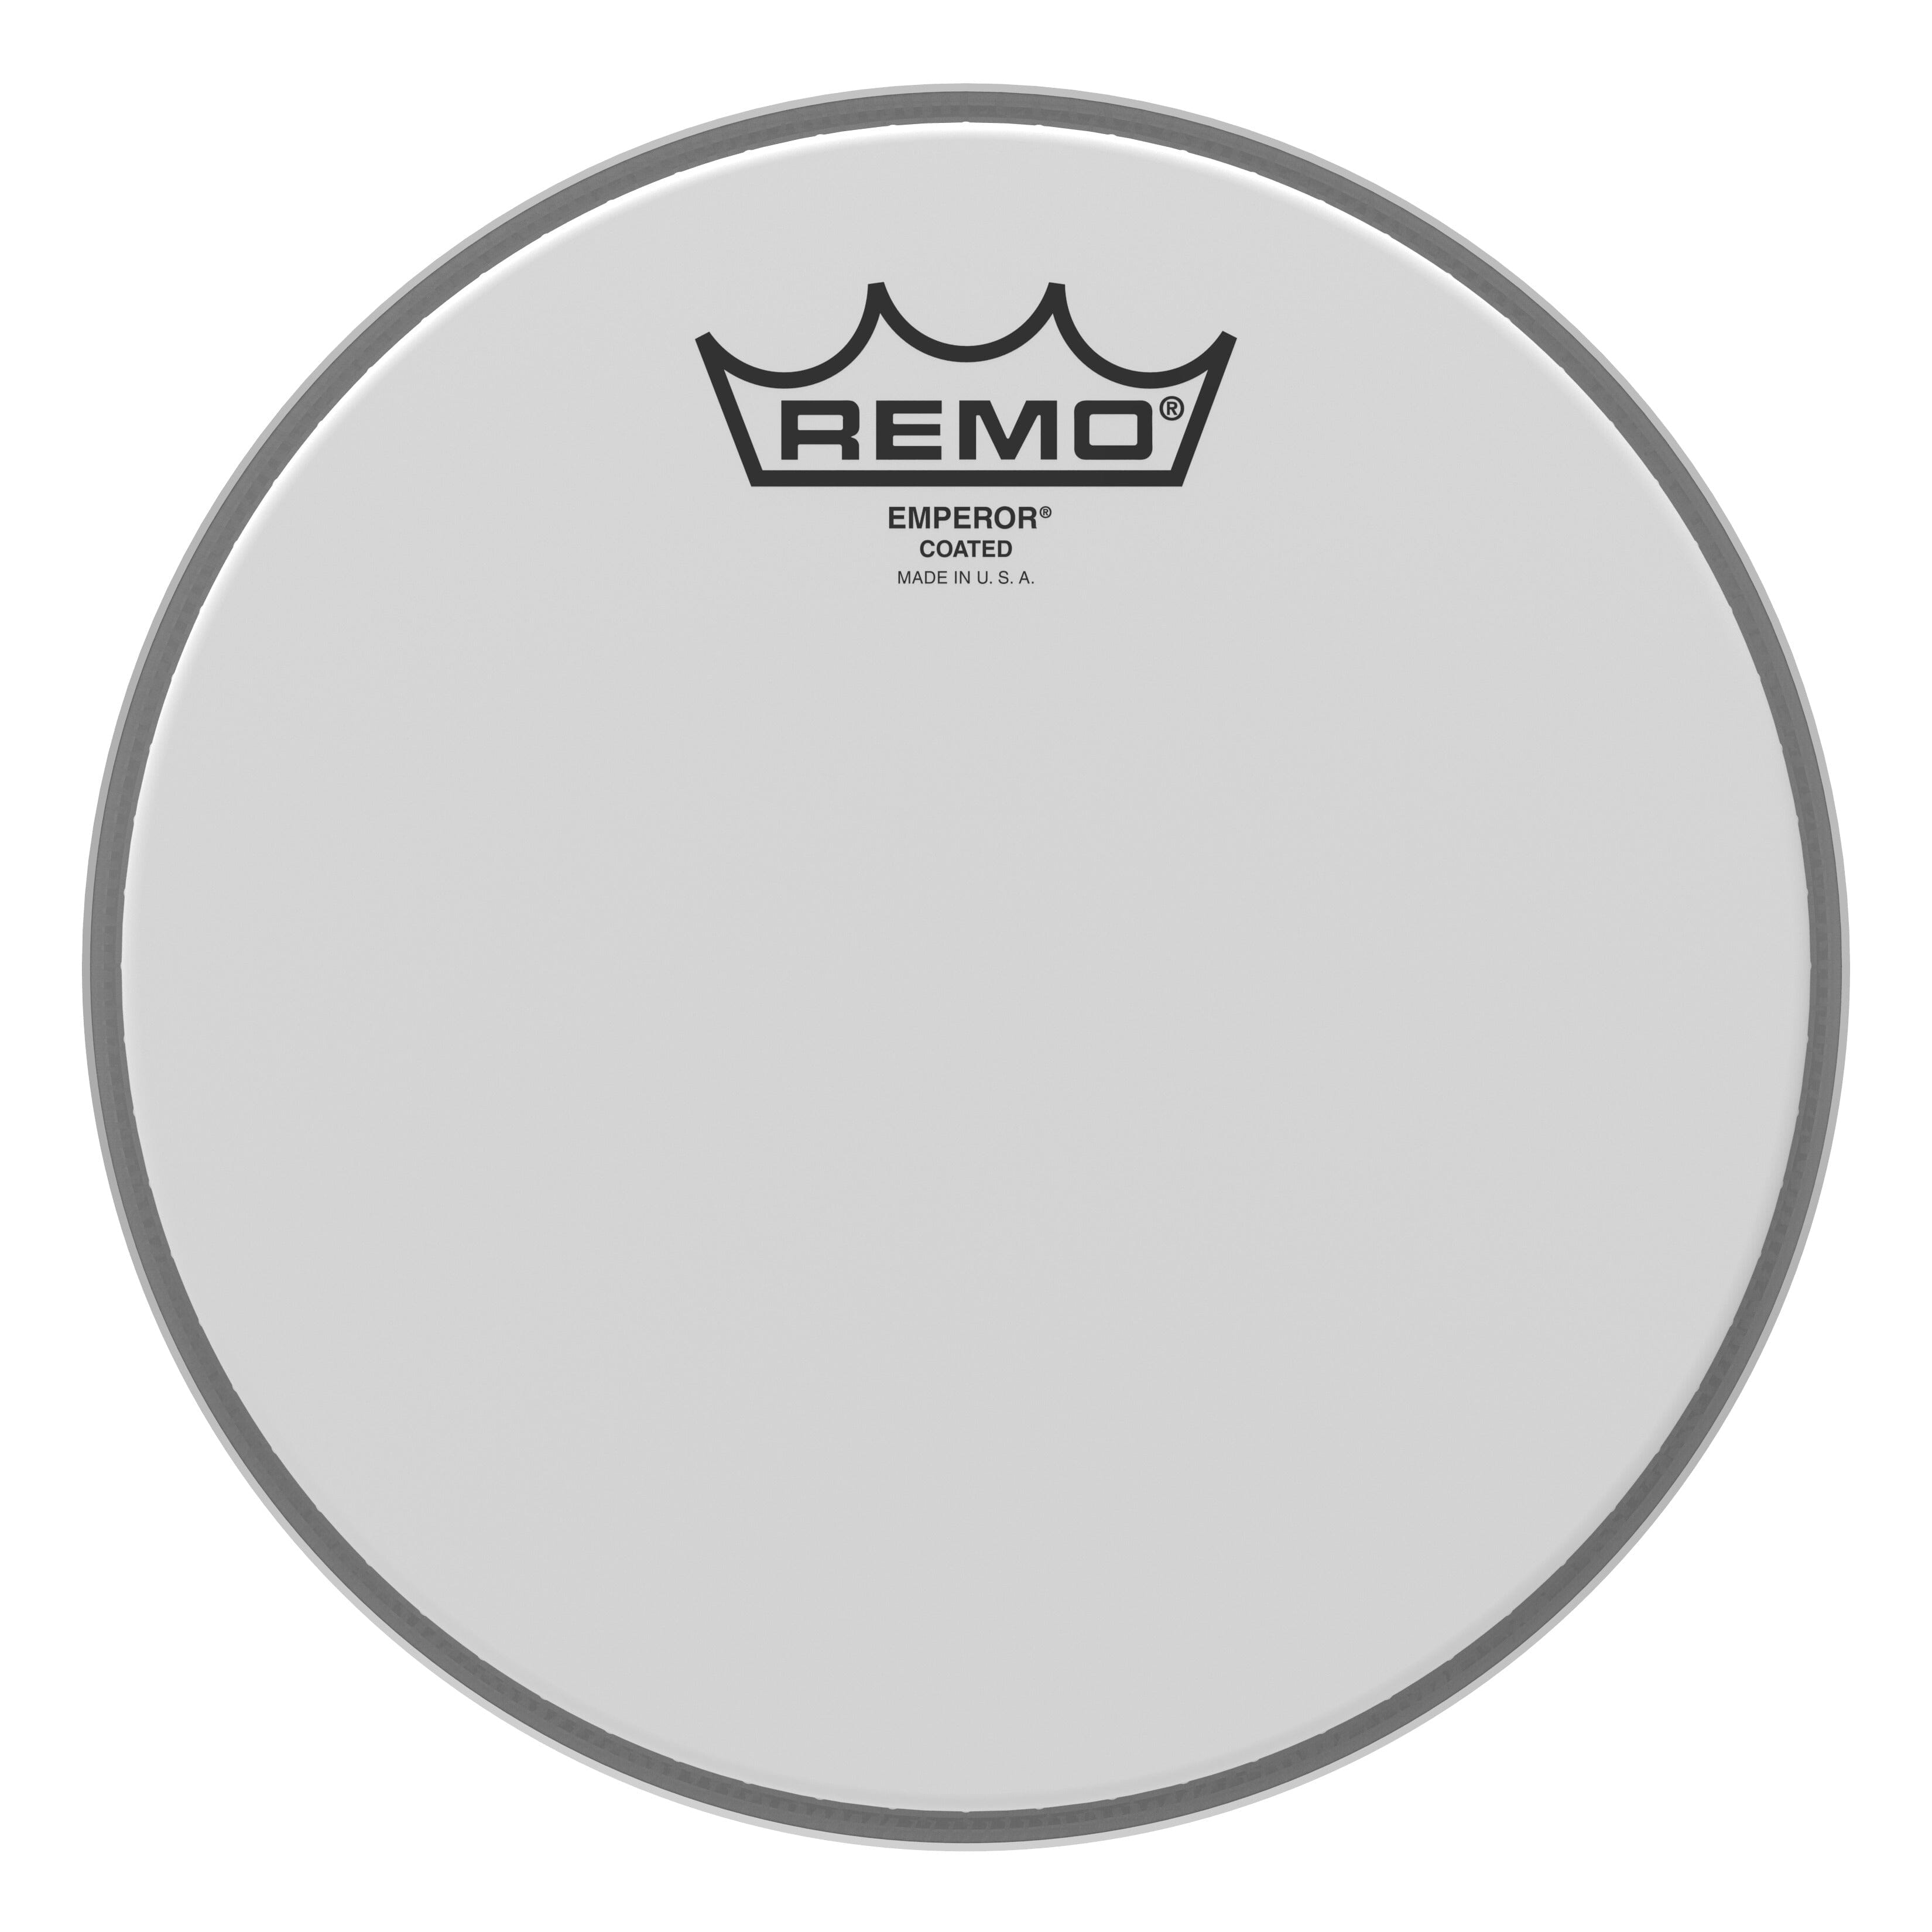 Remo 8" Emperor Coated Drum Head (BE-0108-00) DRUM SKINS Remo 